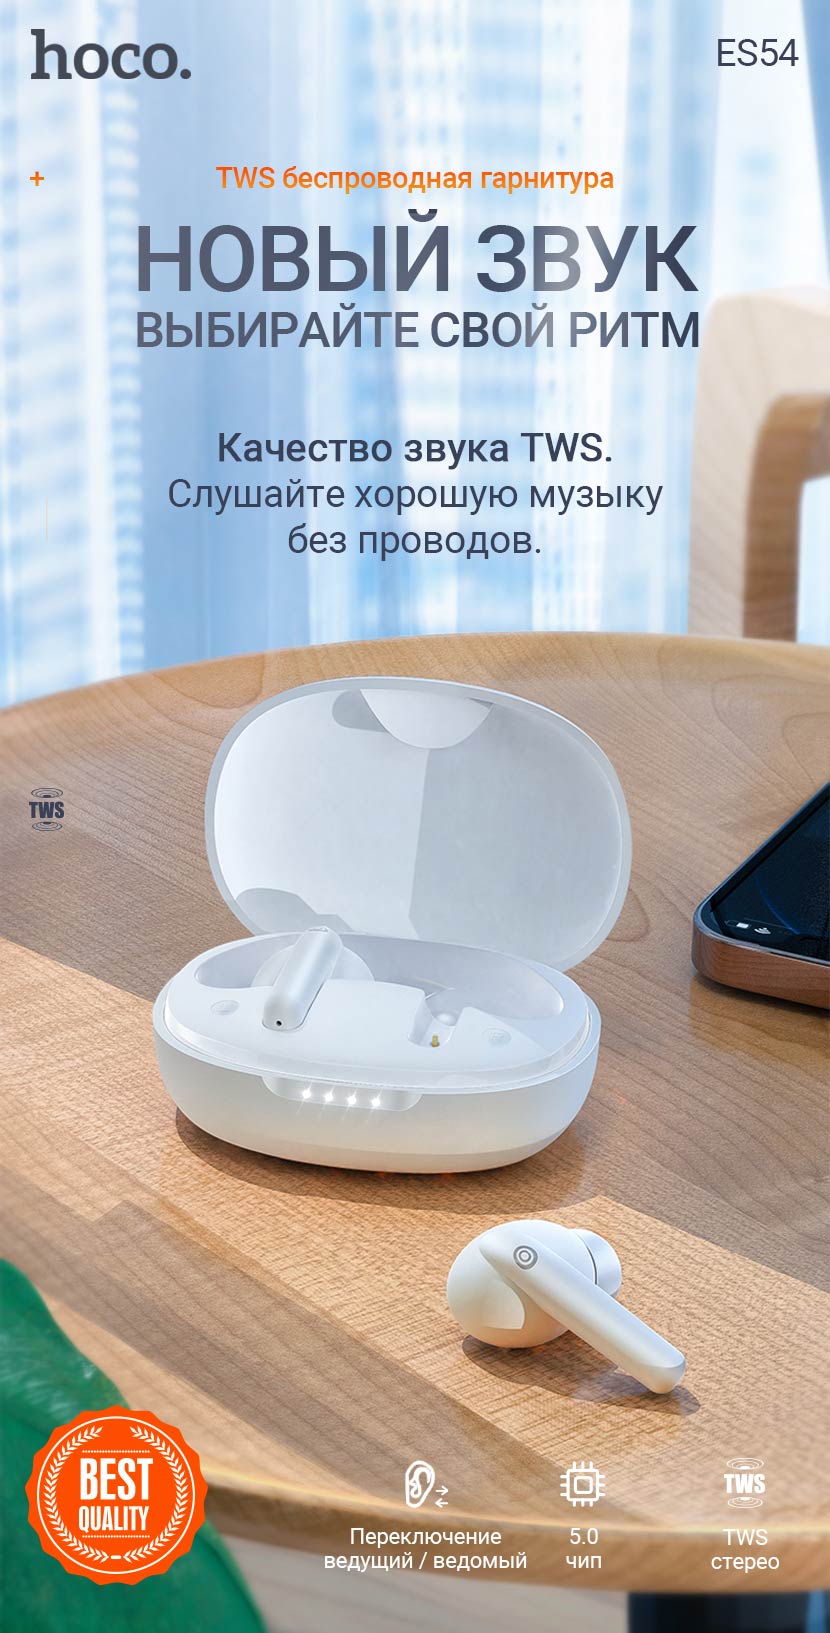 hoco news es54 gorgeous tws wireless headset ru